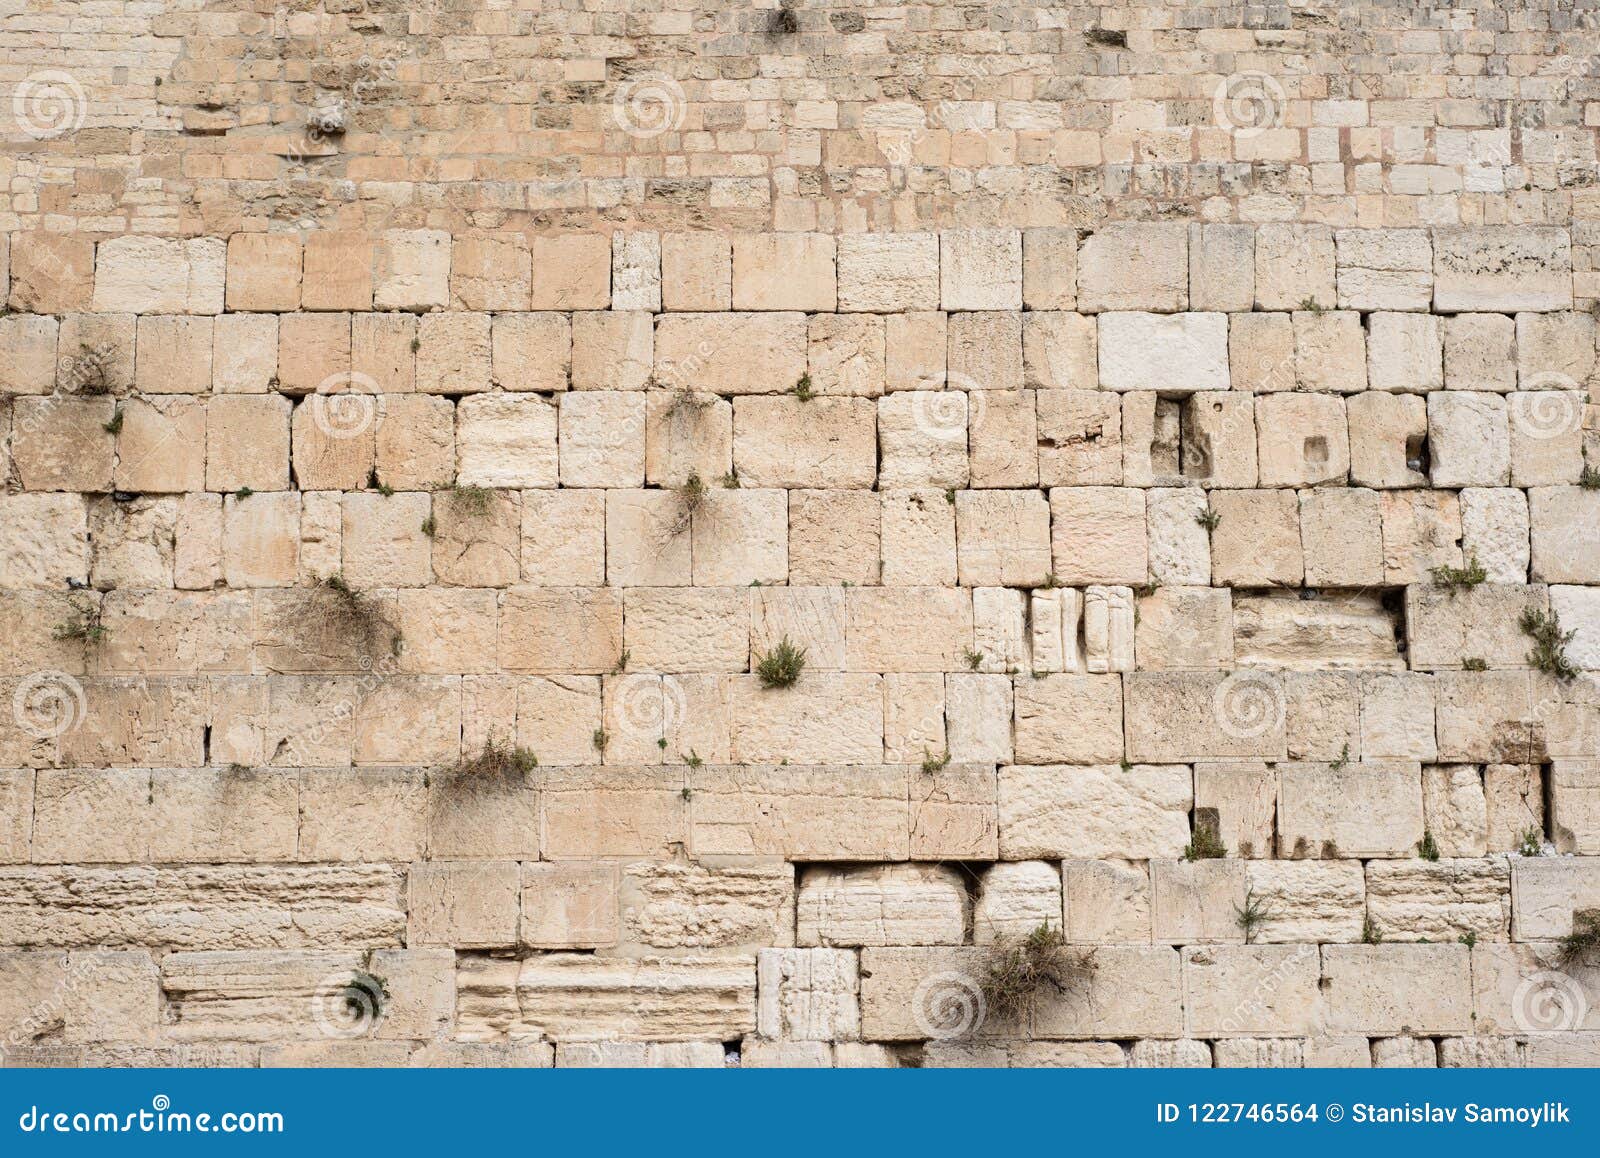 wailing wall kotel, western wall useful for background. jerusalem, israel.